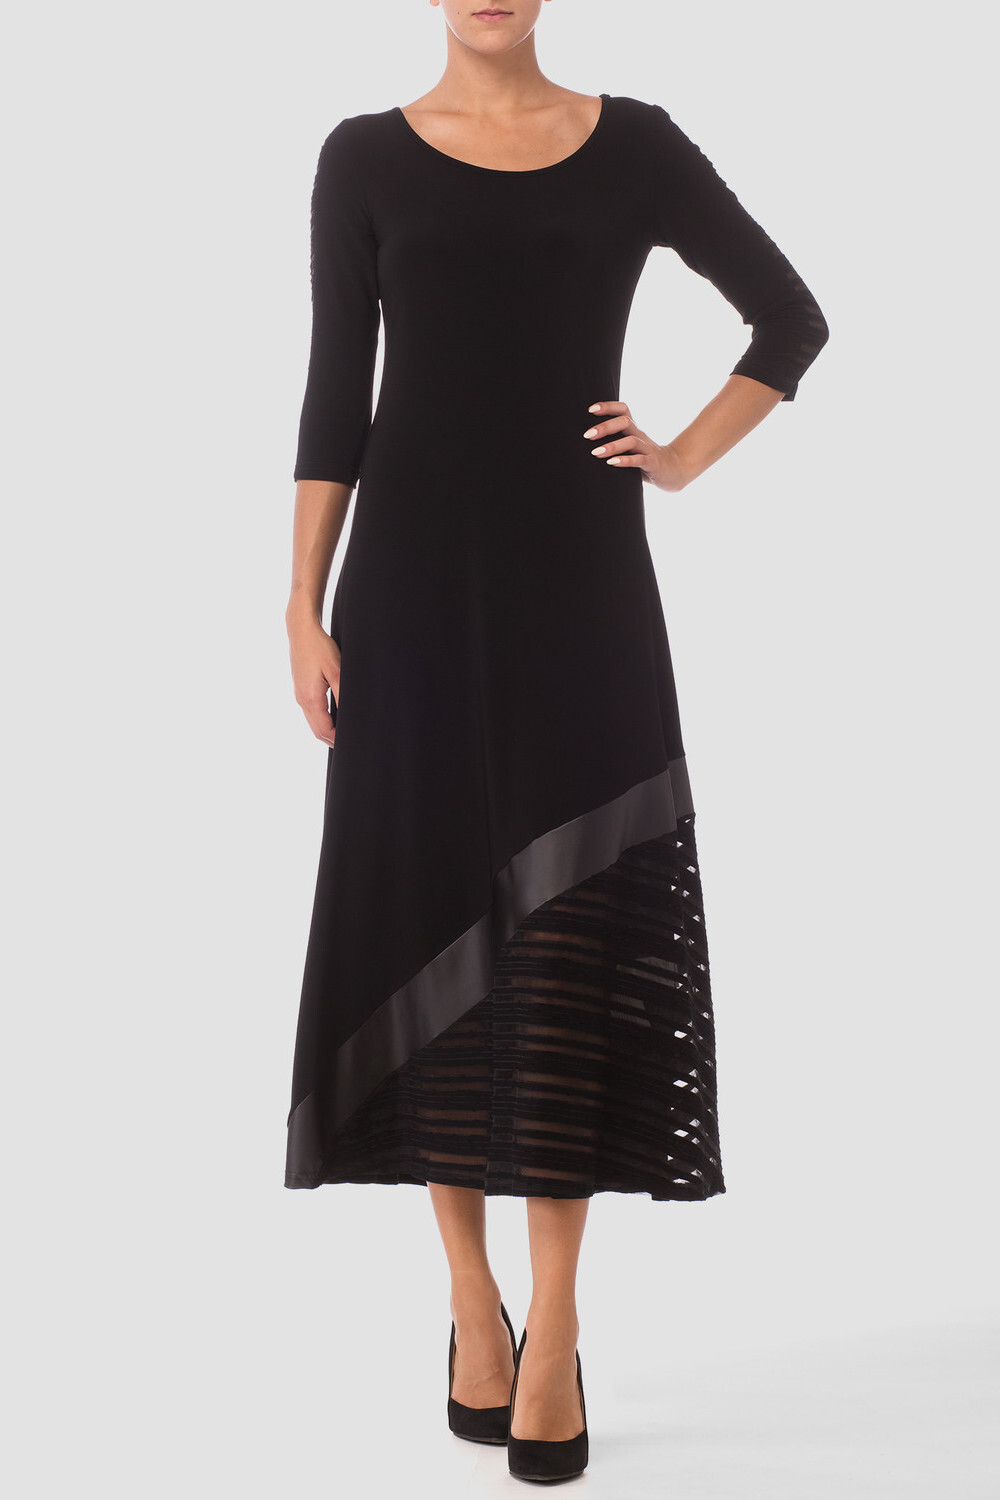 Joseph Ribkoff dress style 174909. Black